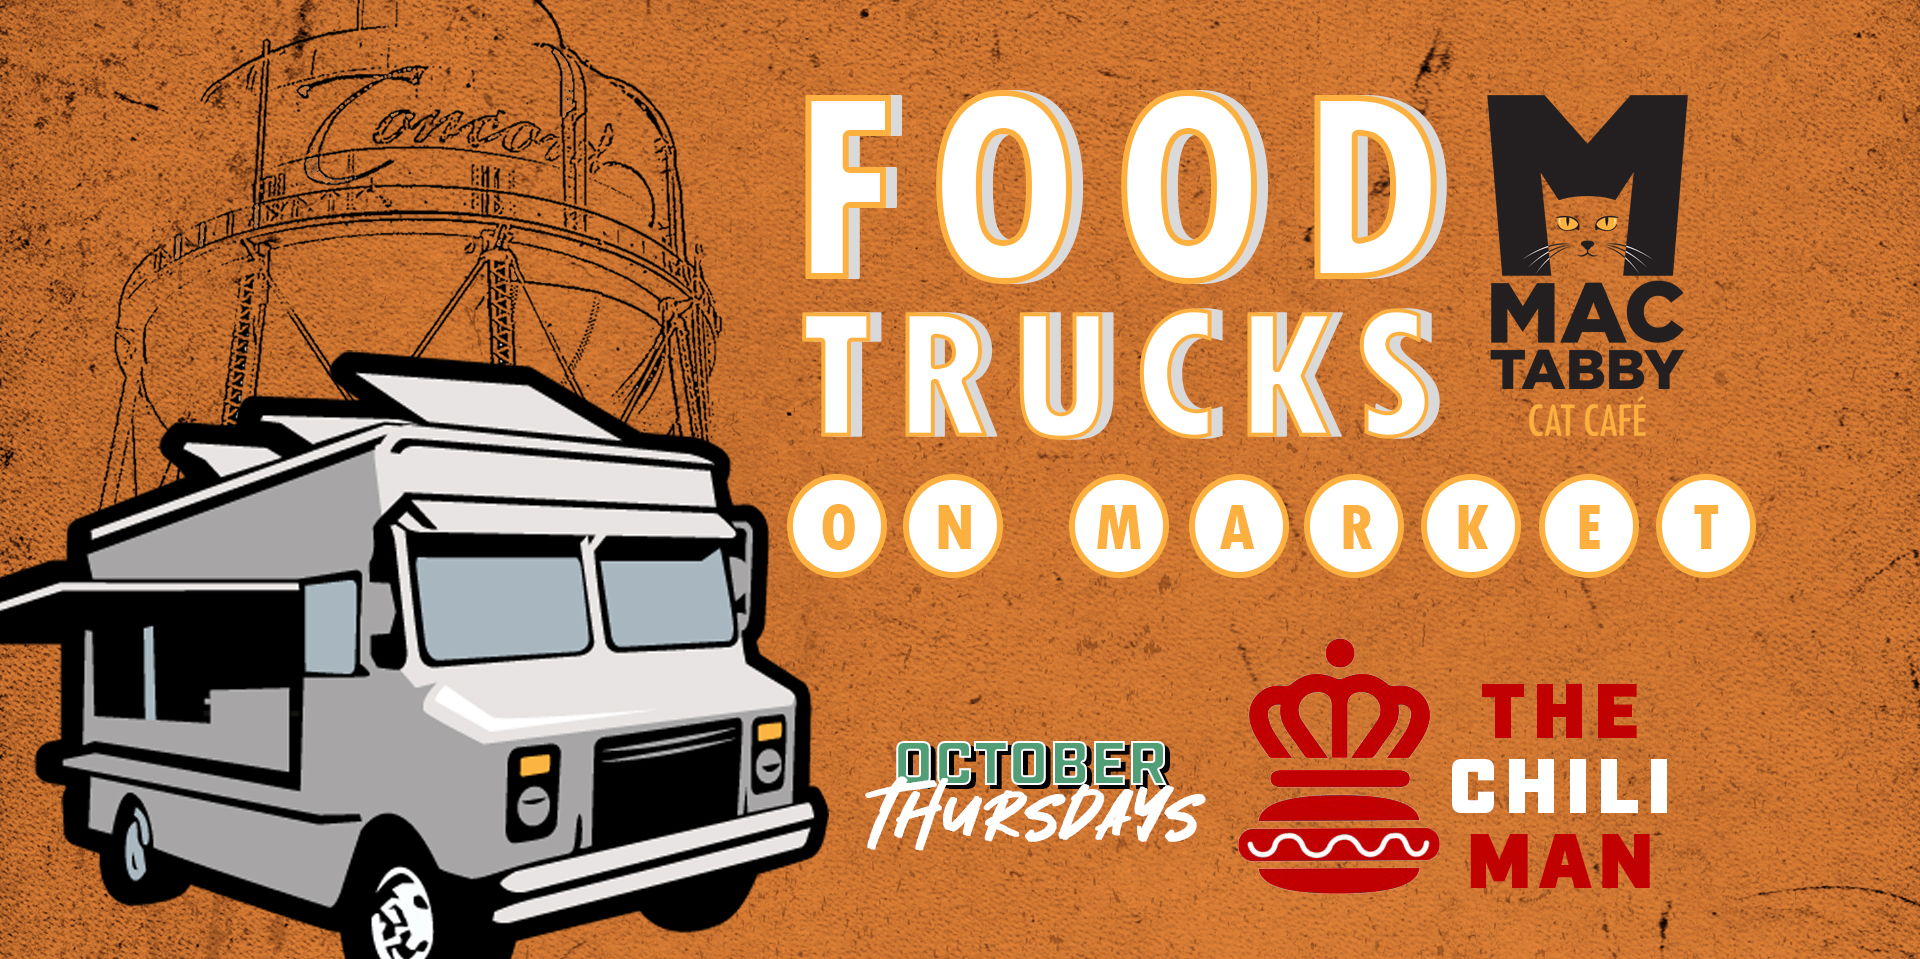 Food Trucks on Market - The Chili Man promotional image